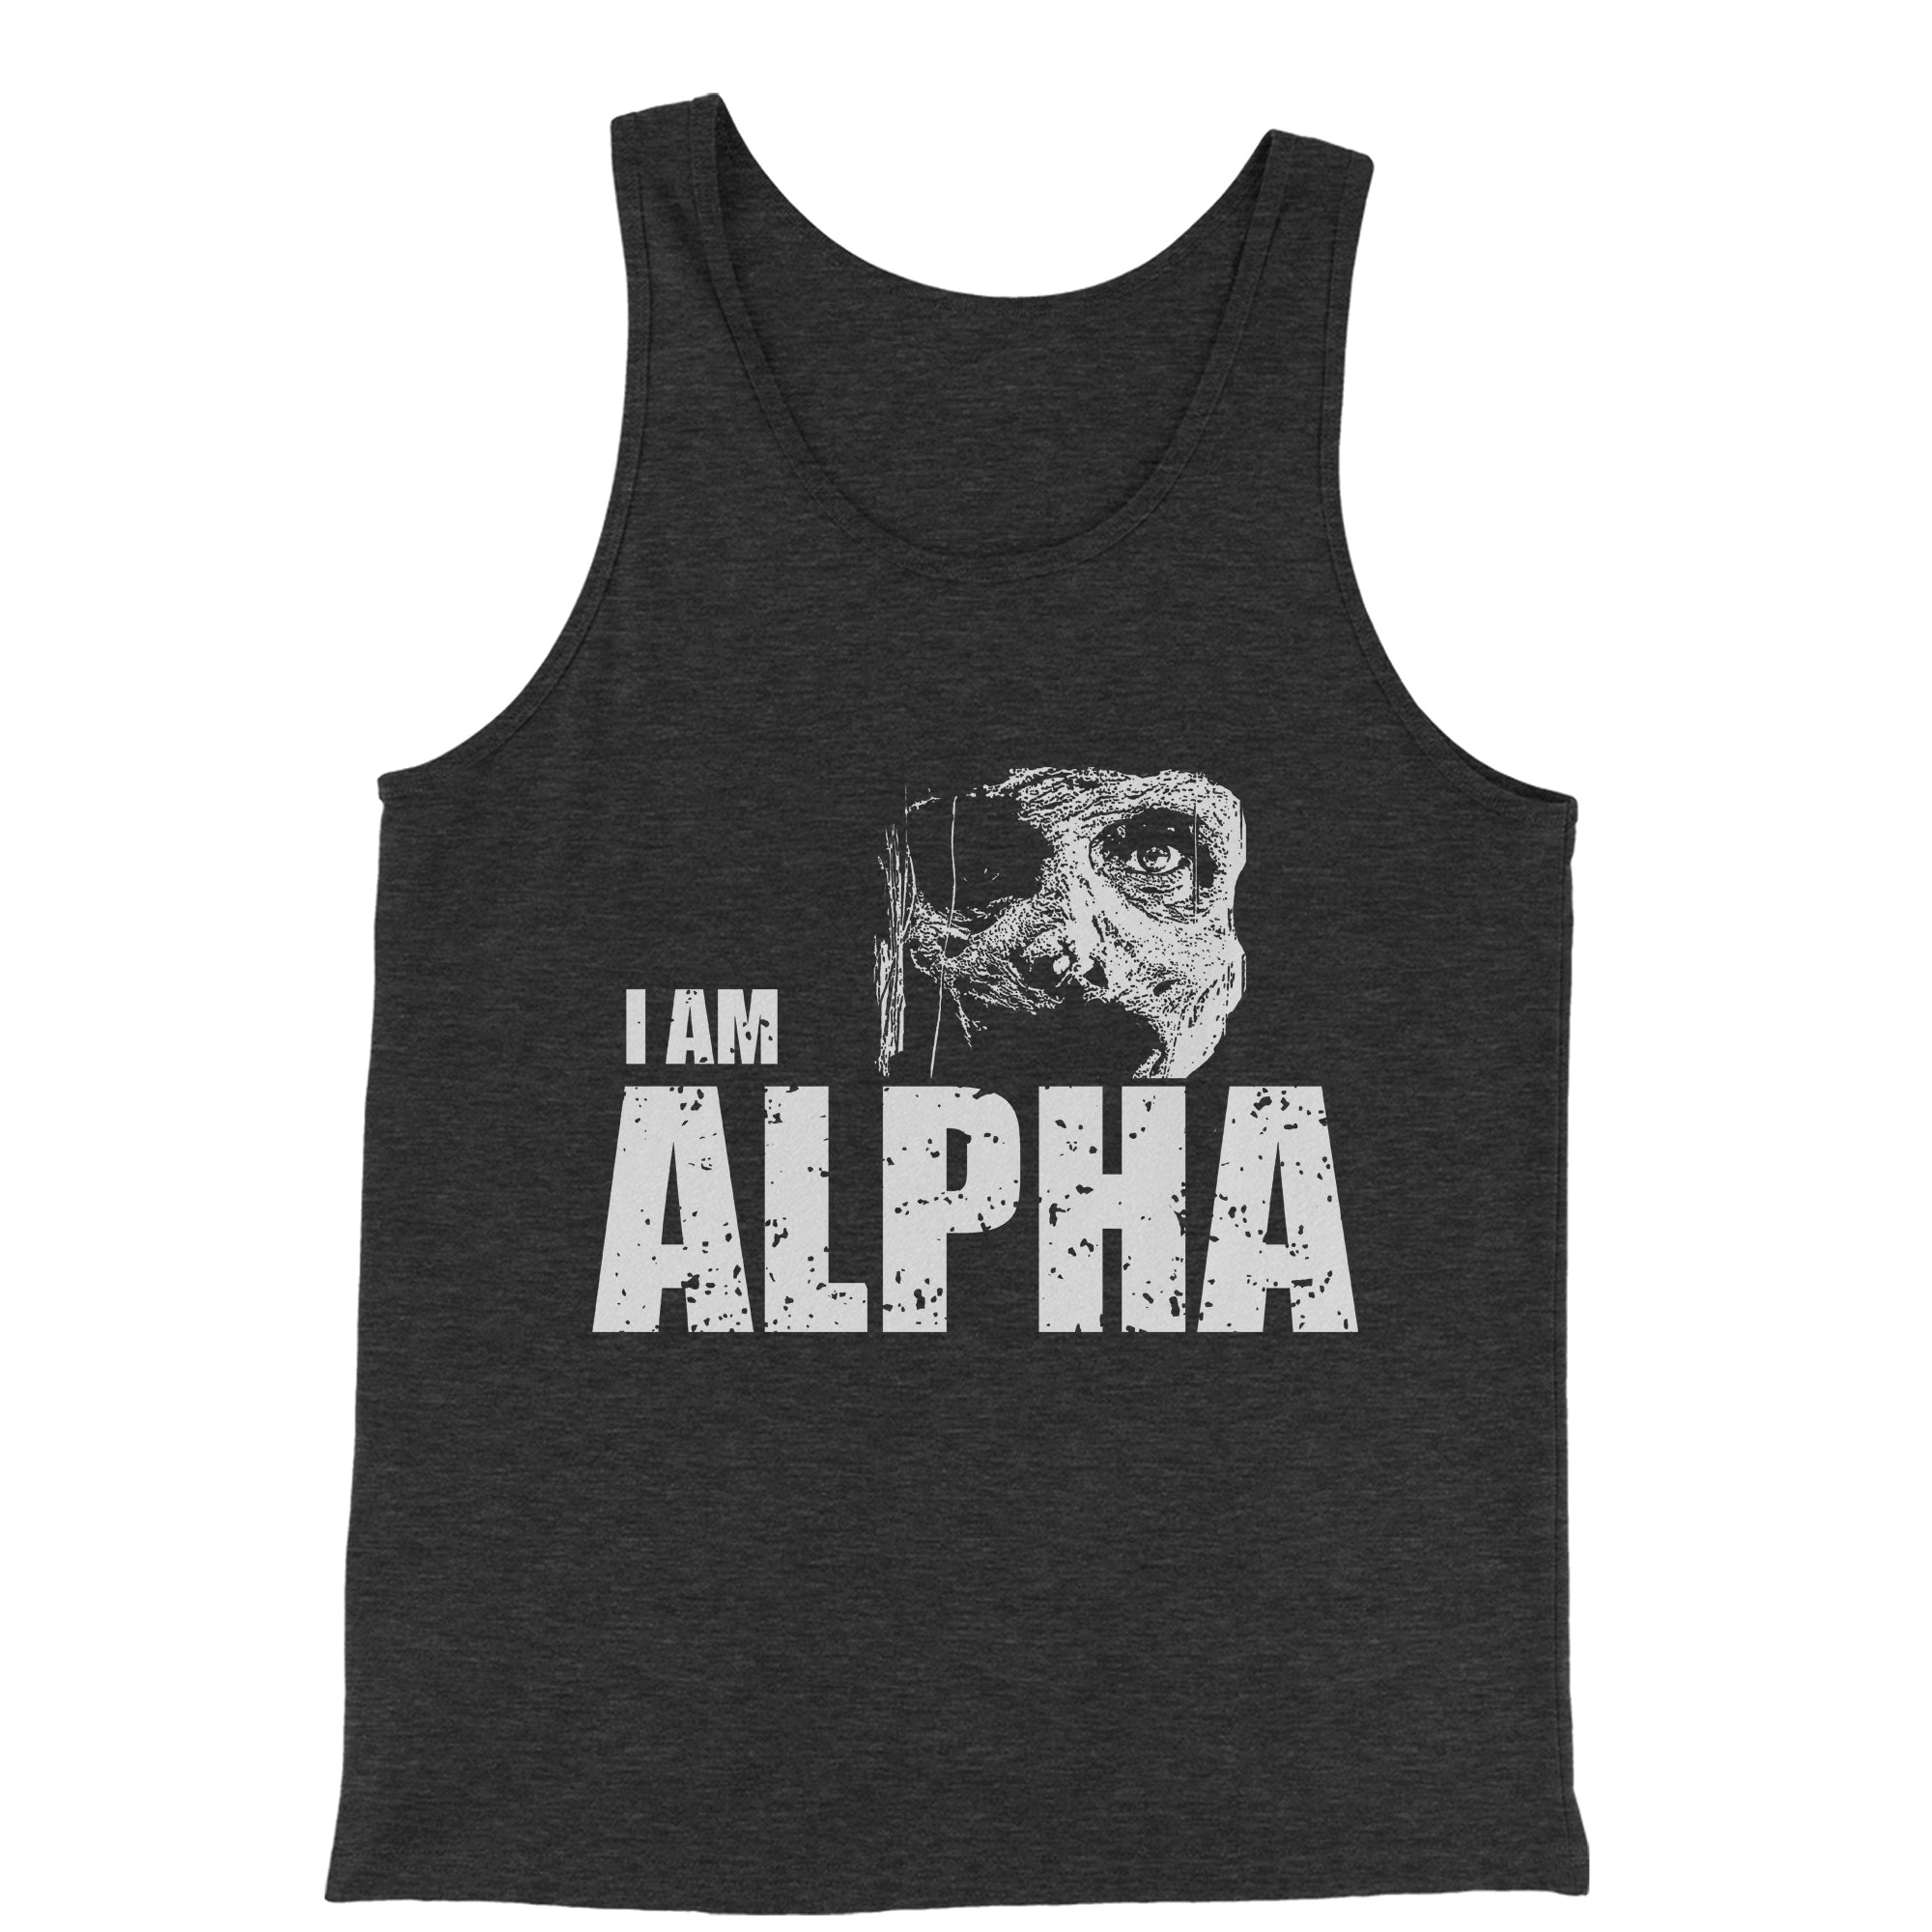 I Am Alpha Walking Men's Jersey Tank